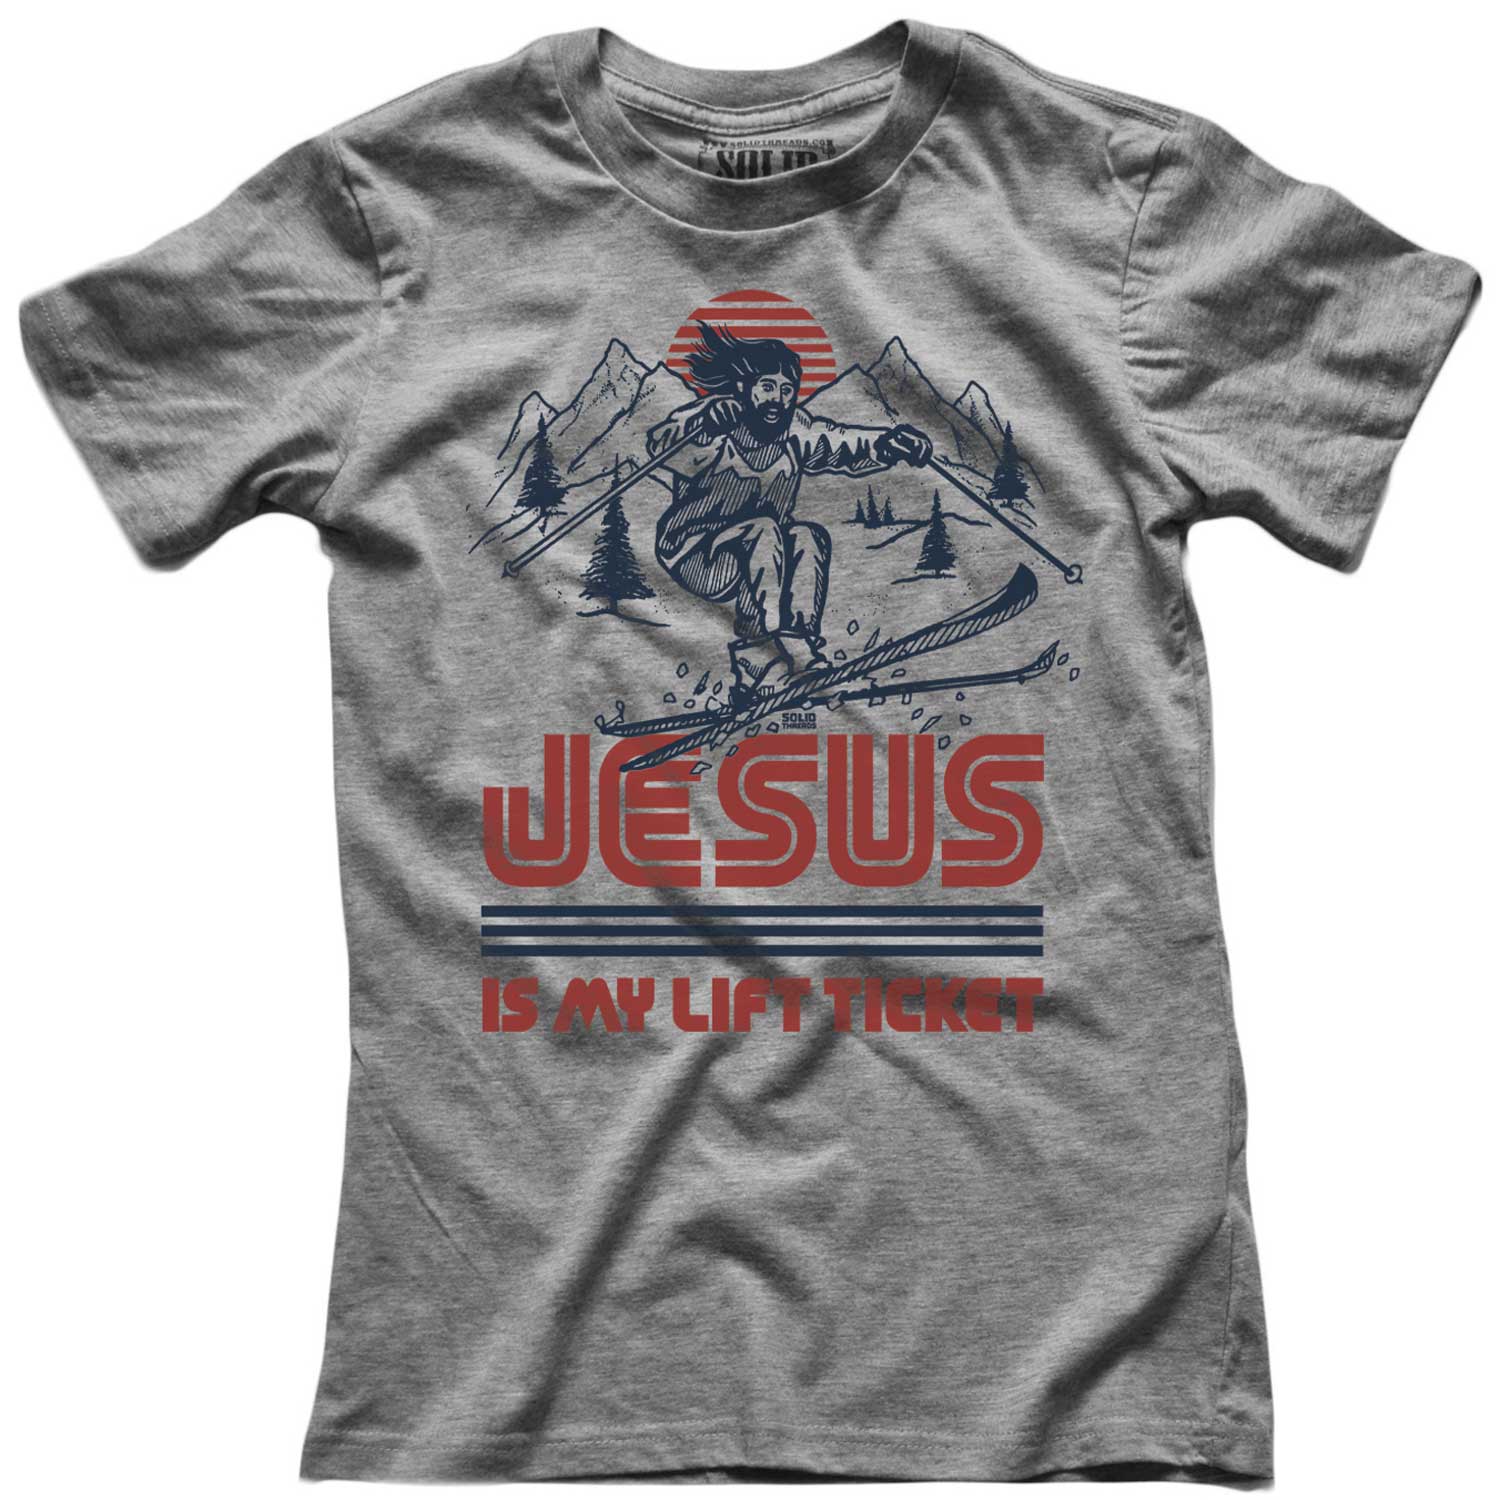 Women's Jesus is My Lift Ticket Graphic Crop Top | Vintage Skiing T-shirt | Solid Threads